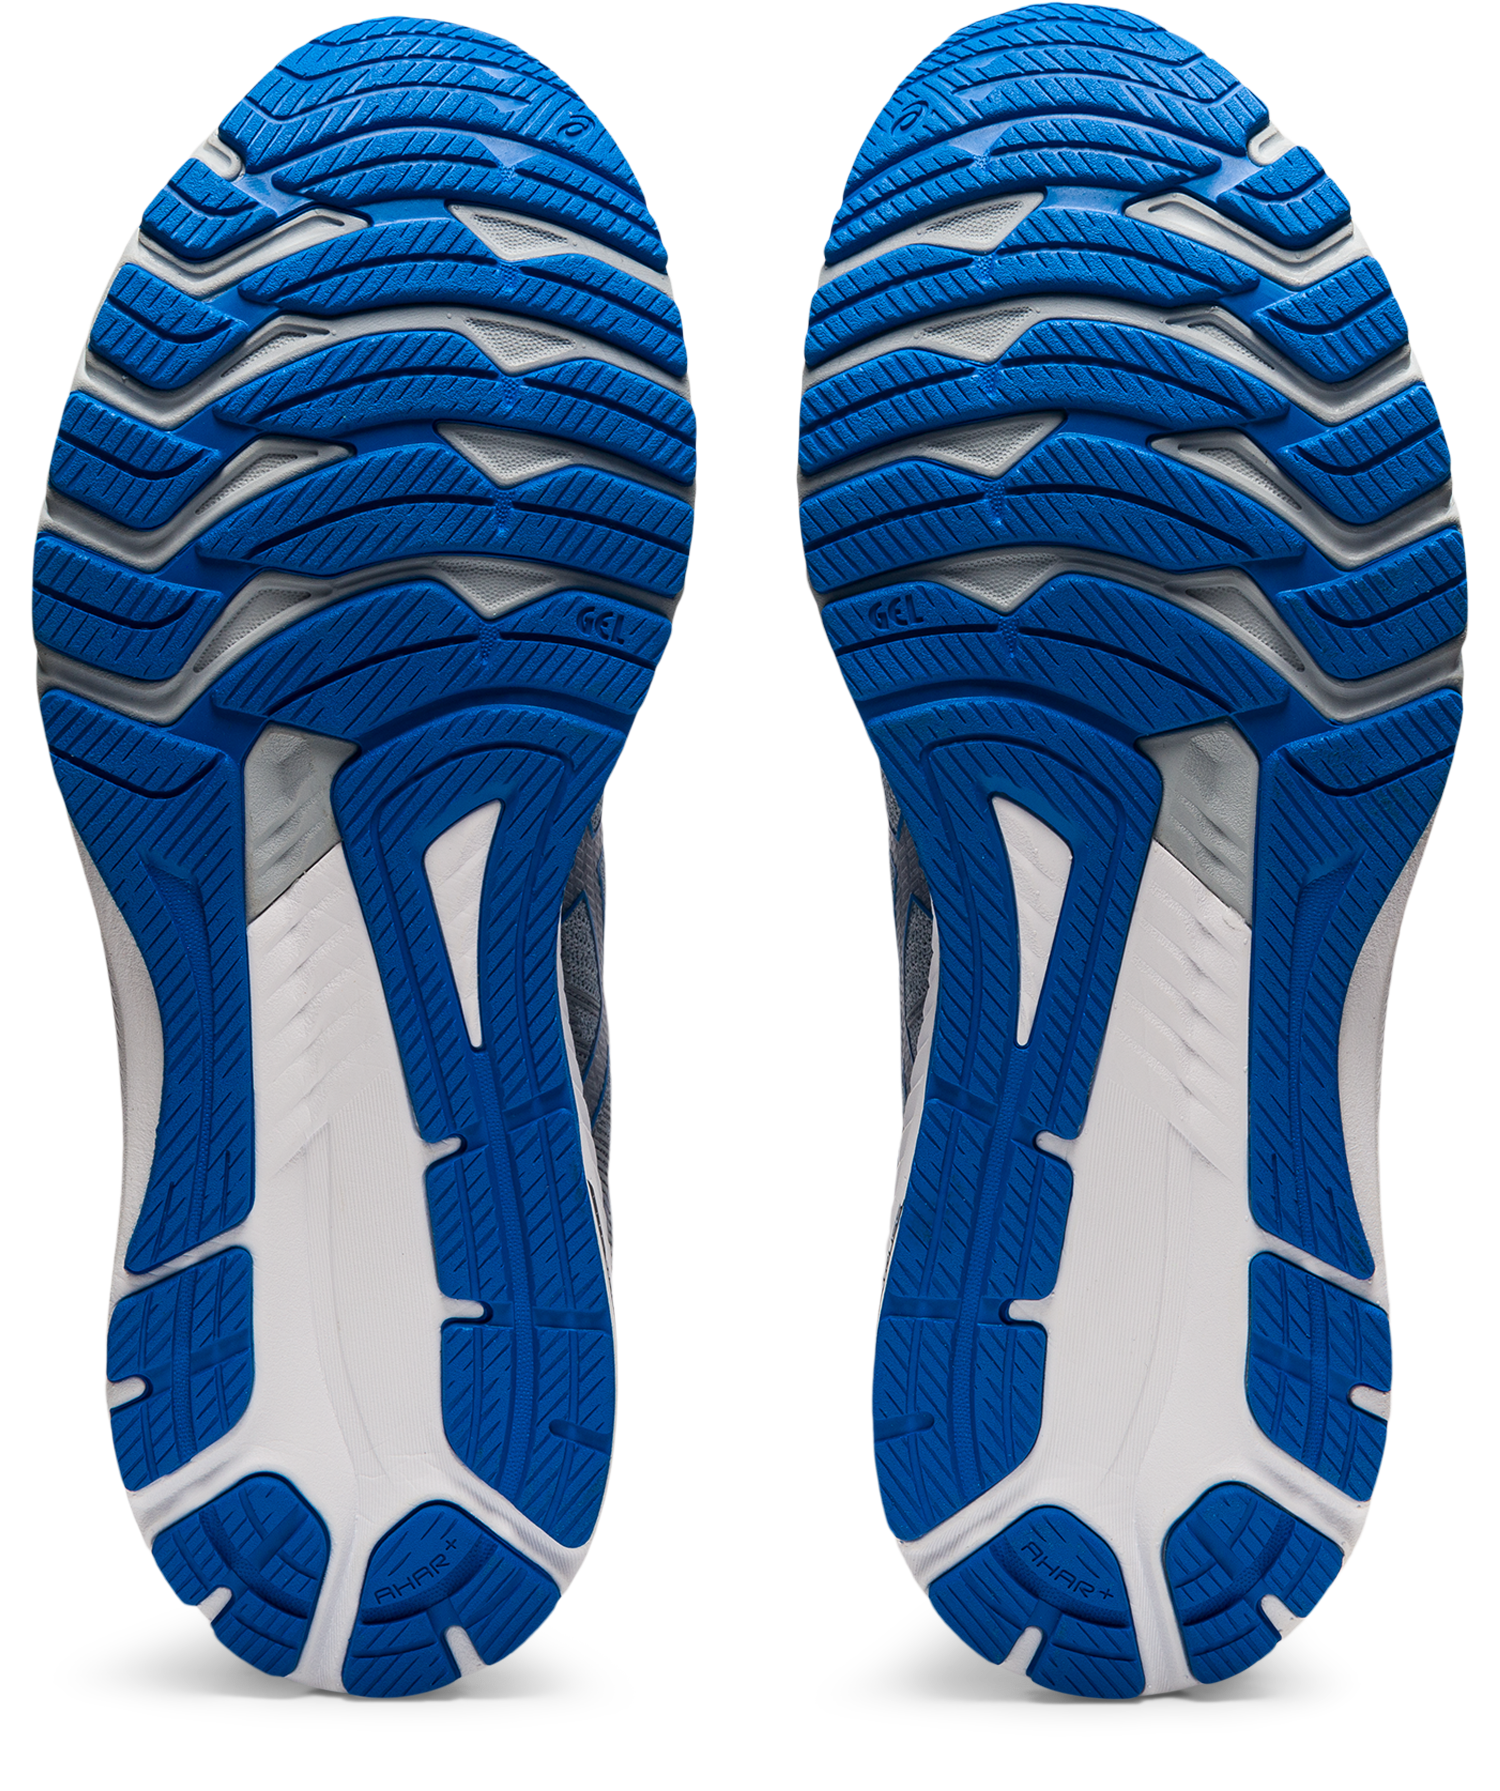 Asics Men's GT-2000 10 Running Shoes in Sheet Rock/Electric Blue